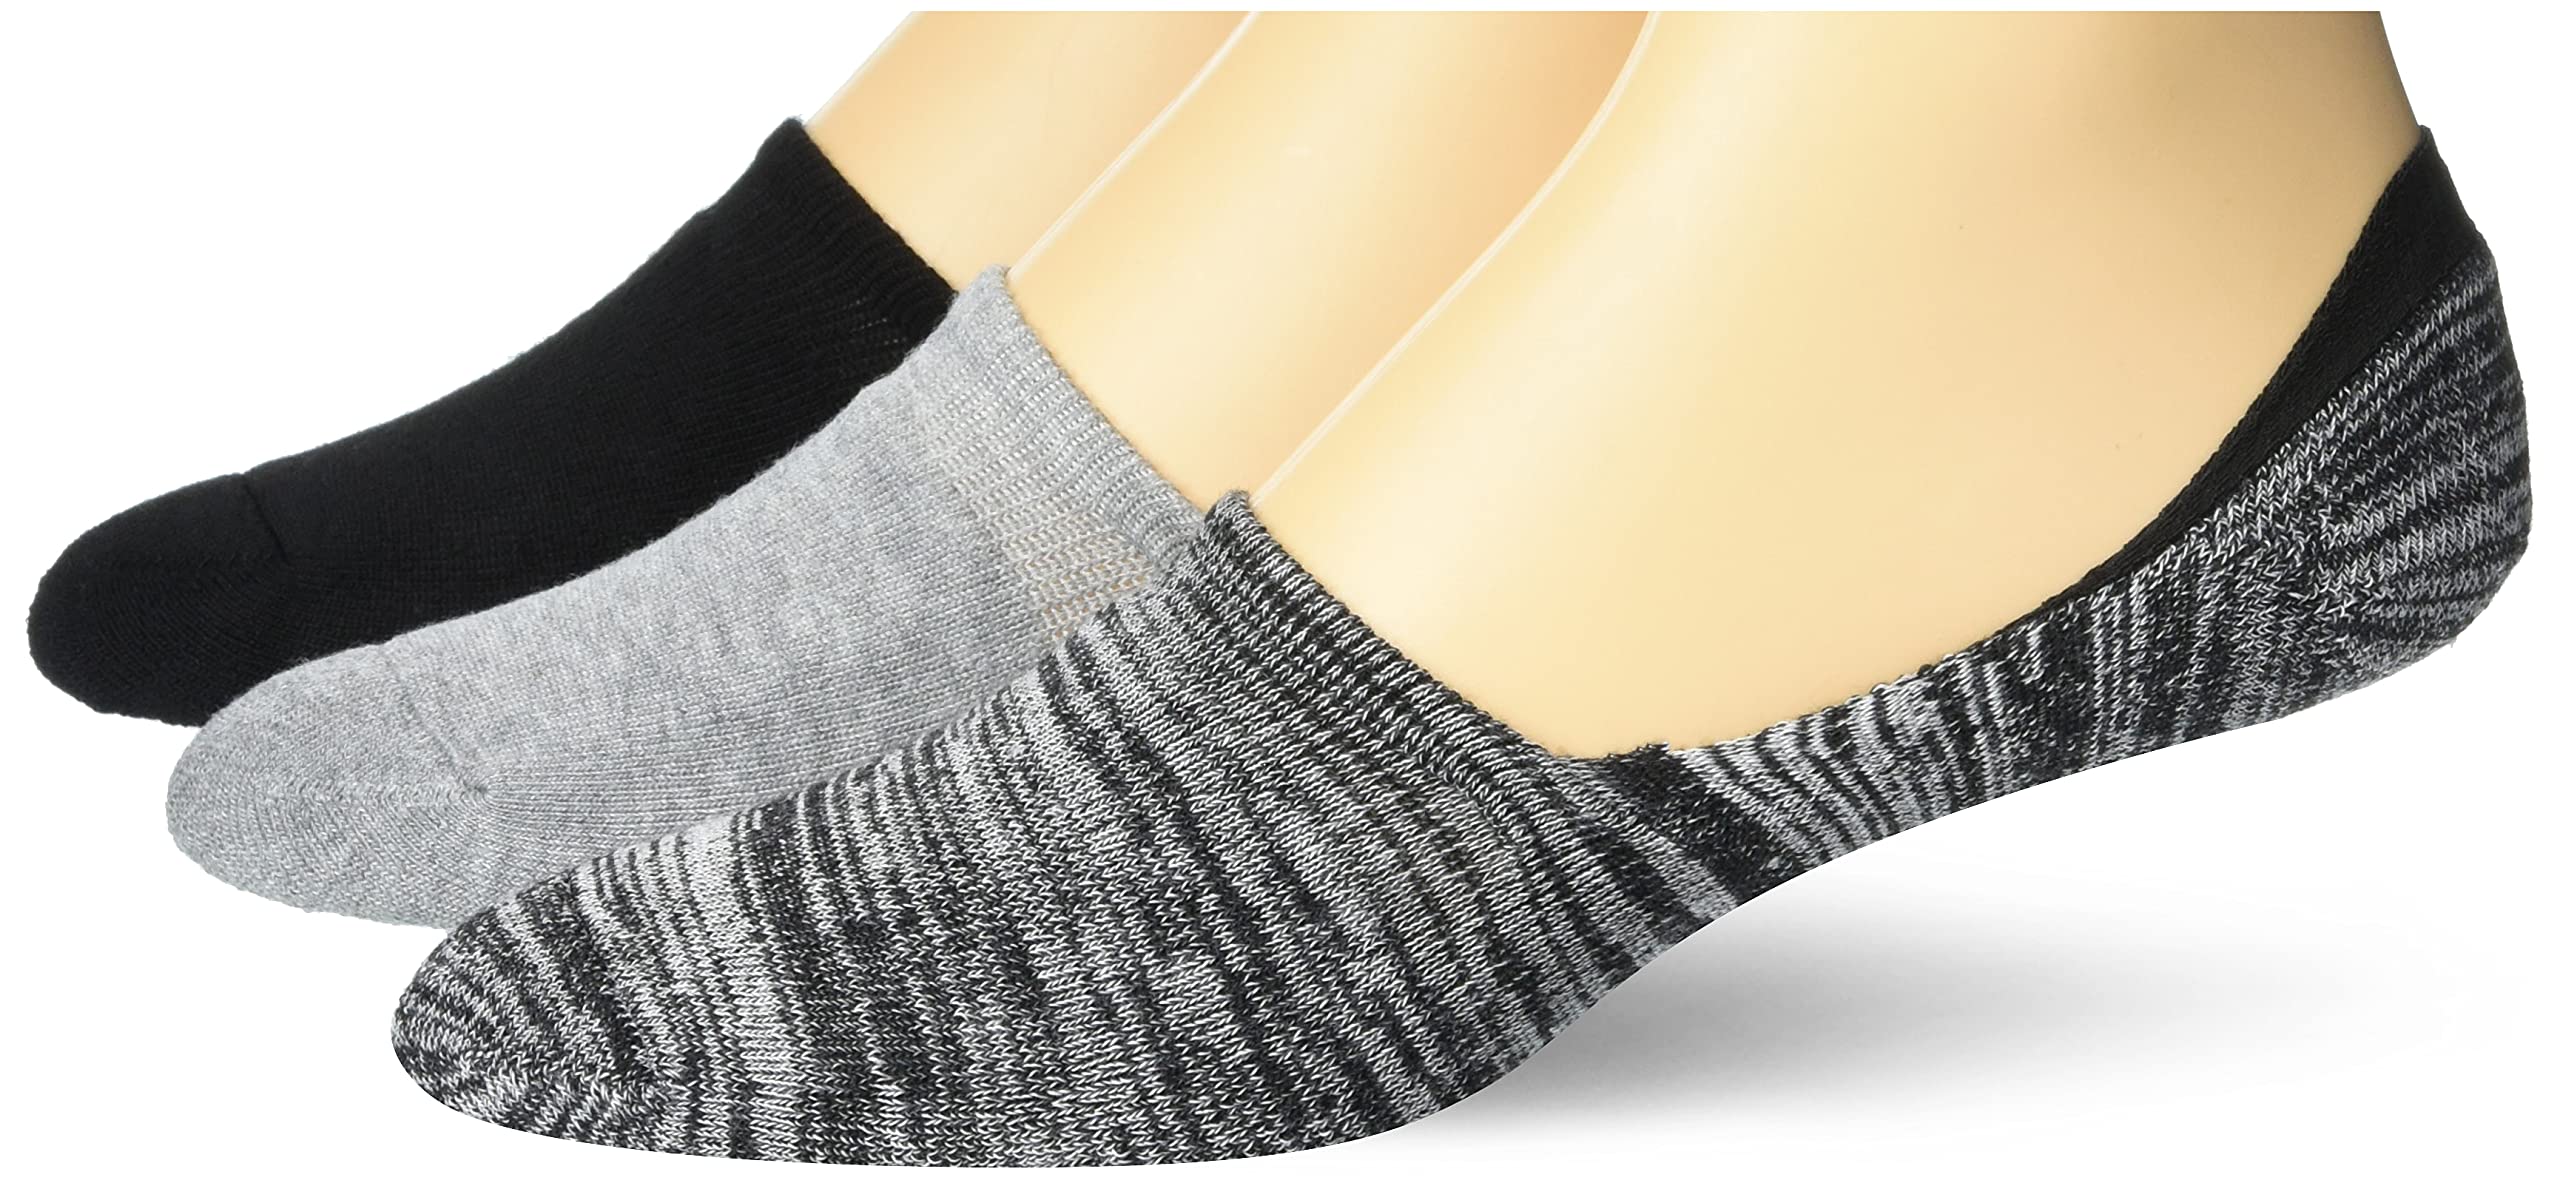 Hanes Men's Full Cushioned Wicking Cool Comfort Liner Socks